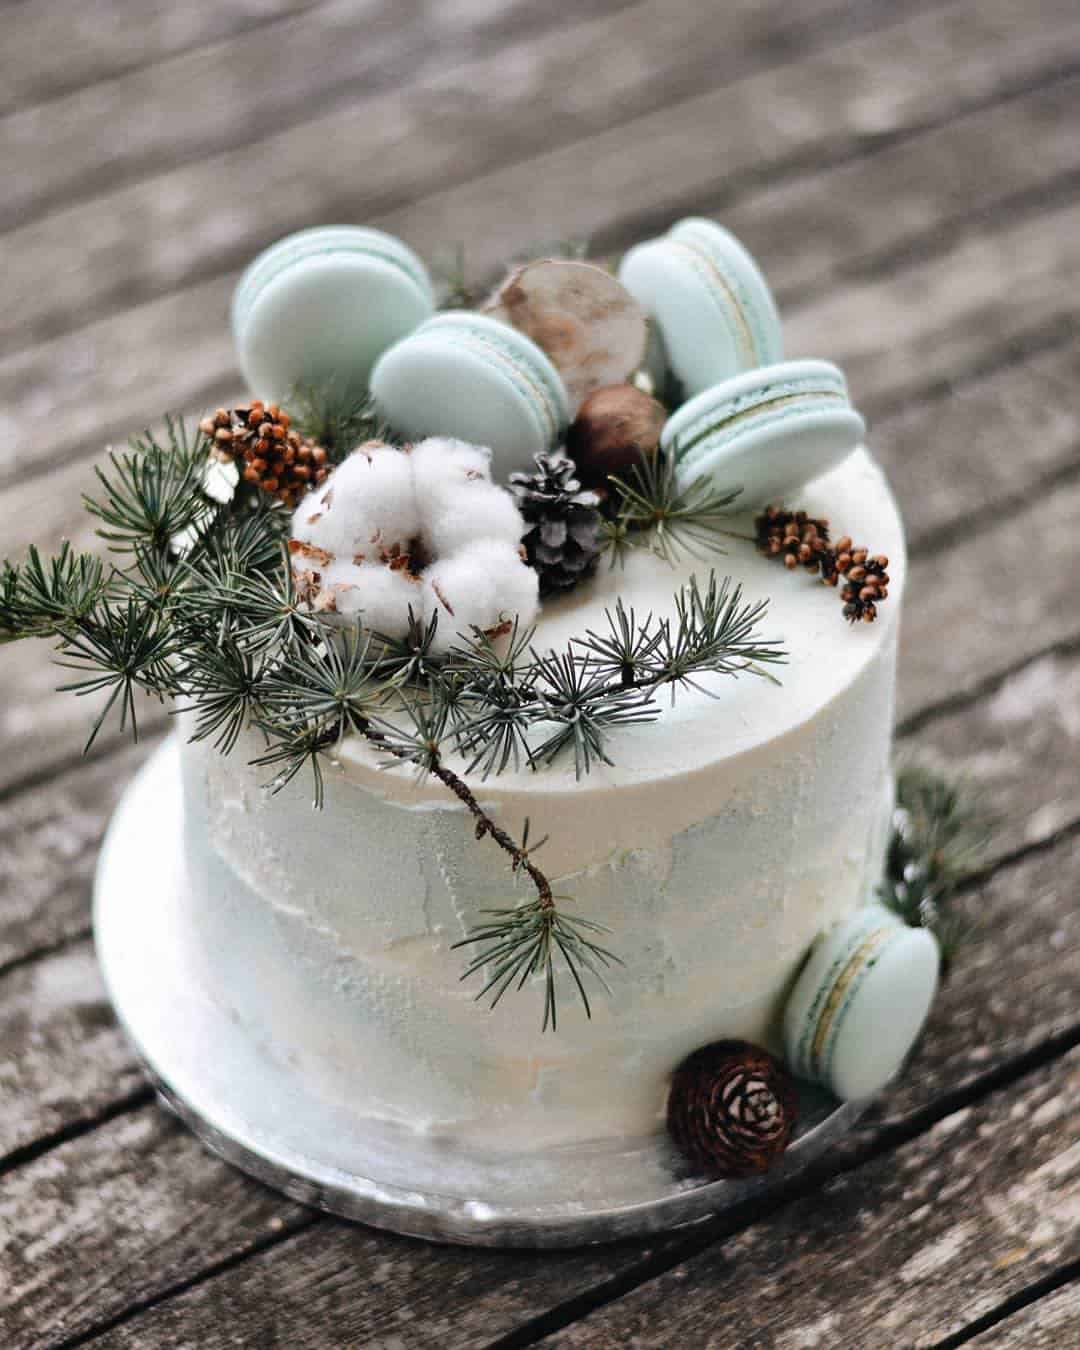 23 Glamorous Winter Wedding Cake Examples